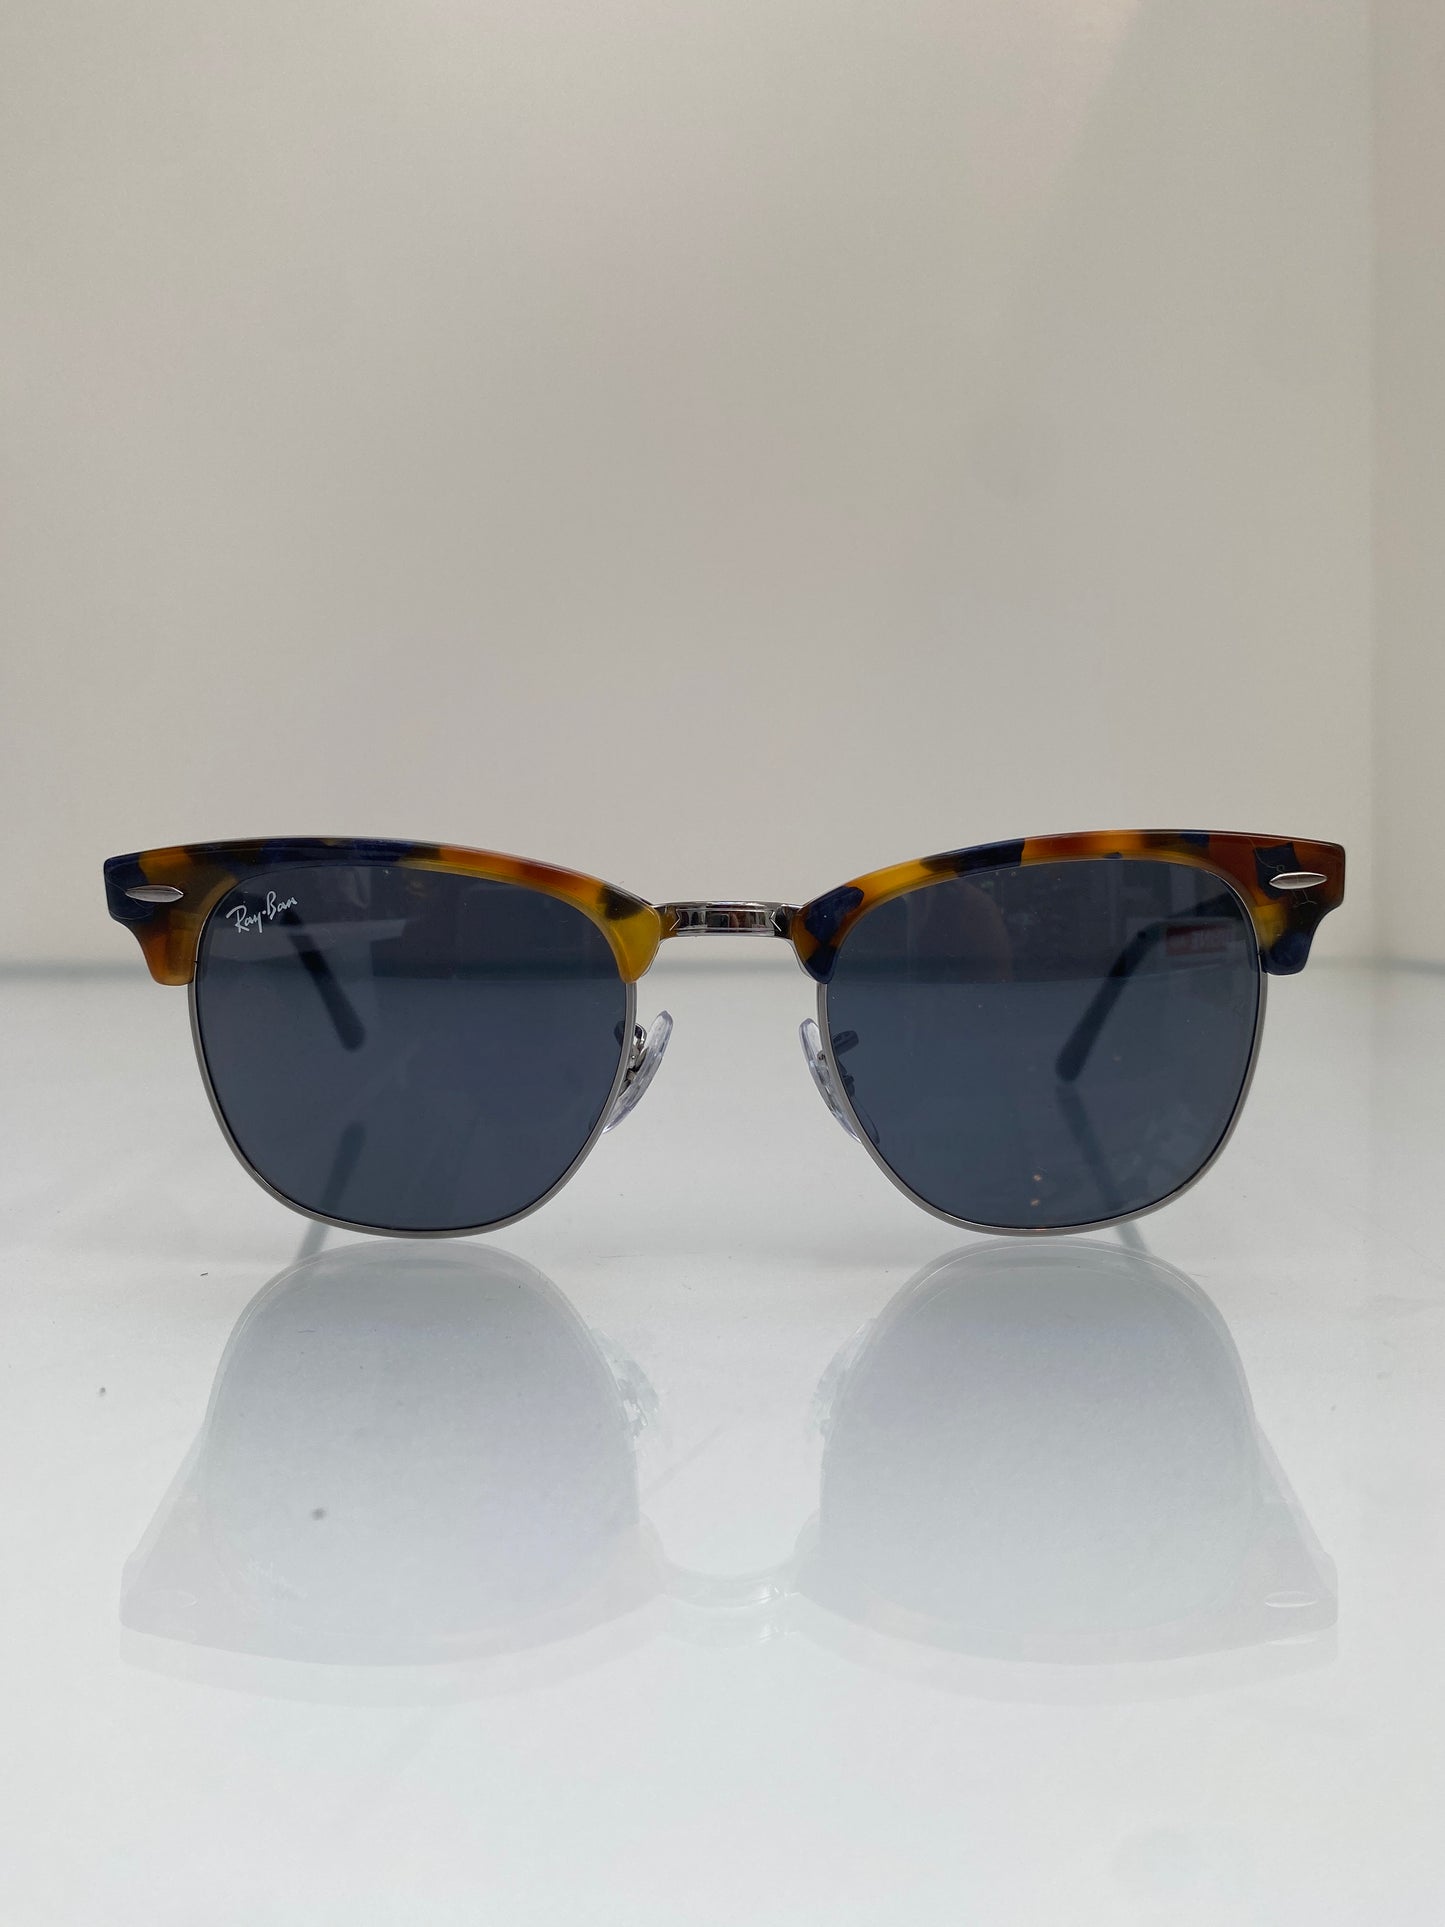 Rayban Clubmaster Navy Tortoise Shell Sunglasses